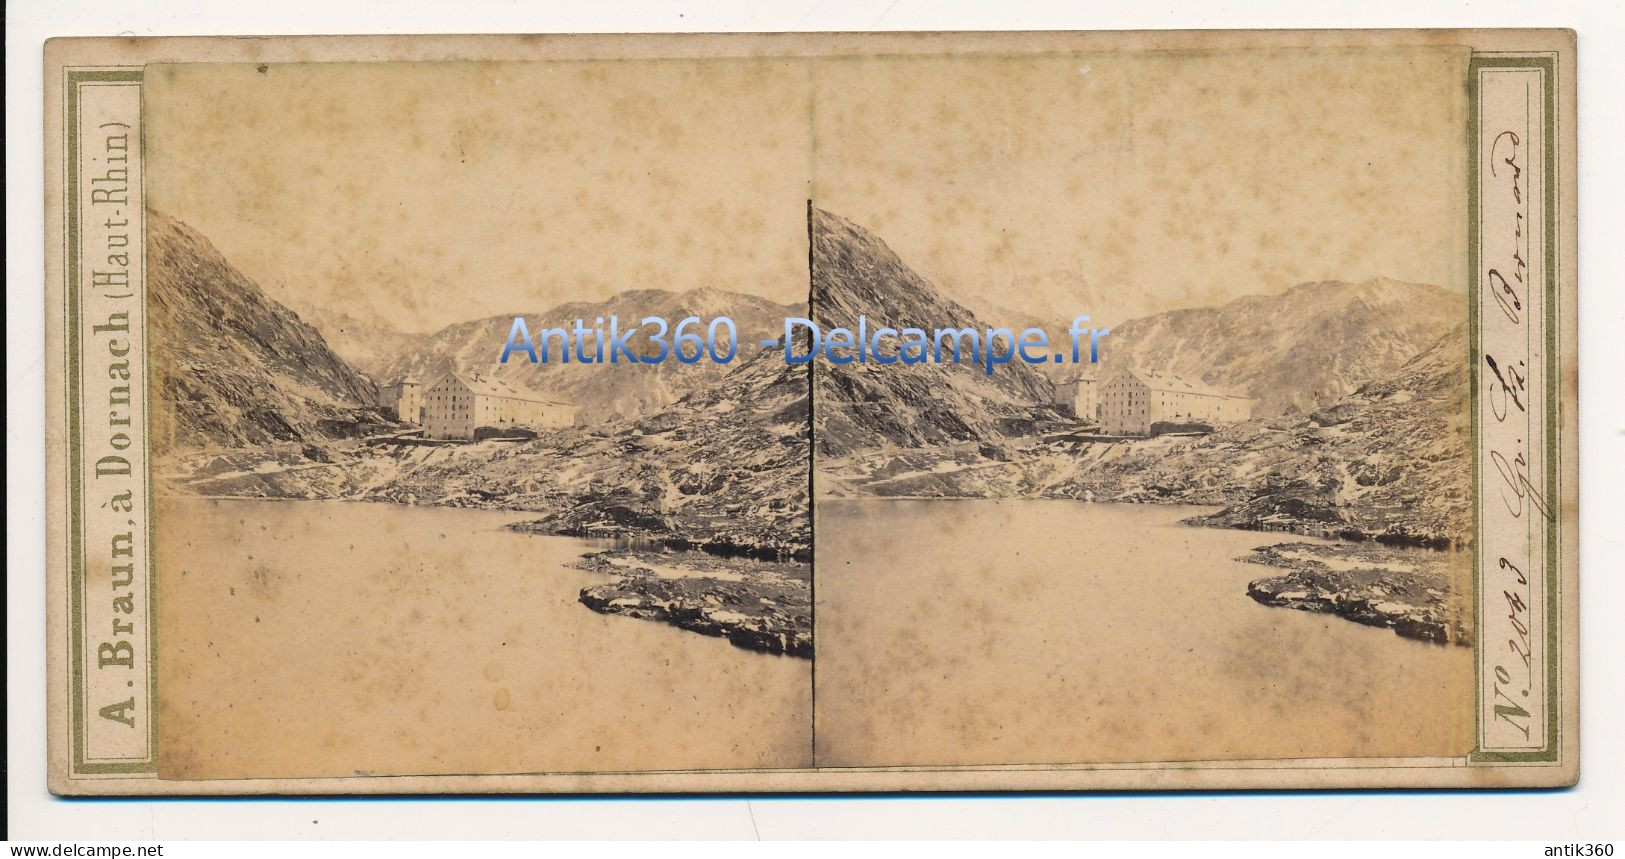 Photographie Ancienne Vue Stéréoscopique Circa 1860 Suisse Isère Vue Du Grand Saint Bernard Photographe Adolphe BRAUN - Stereoscopic